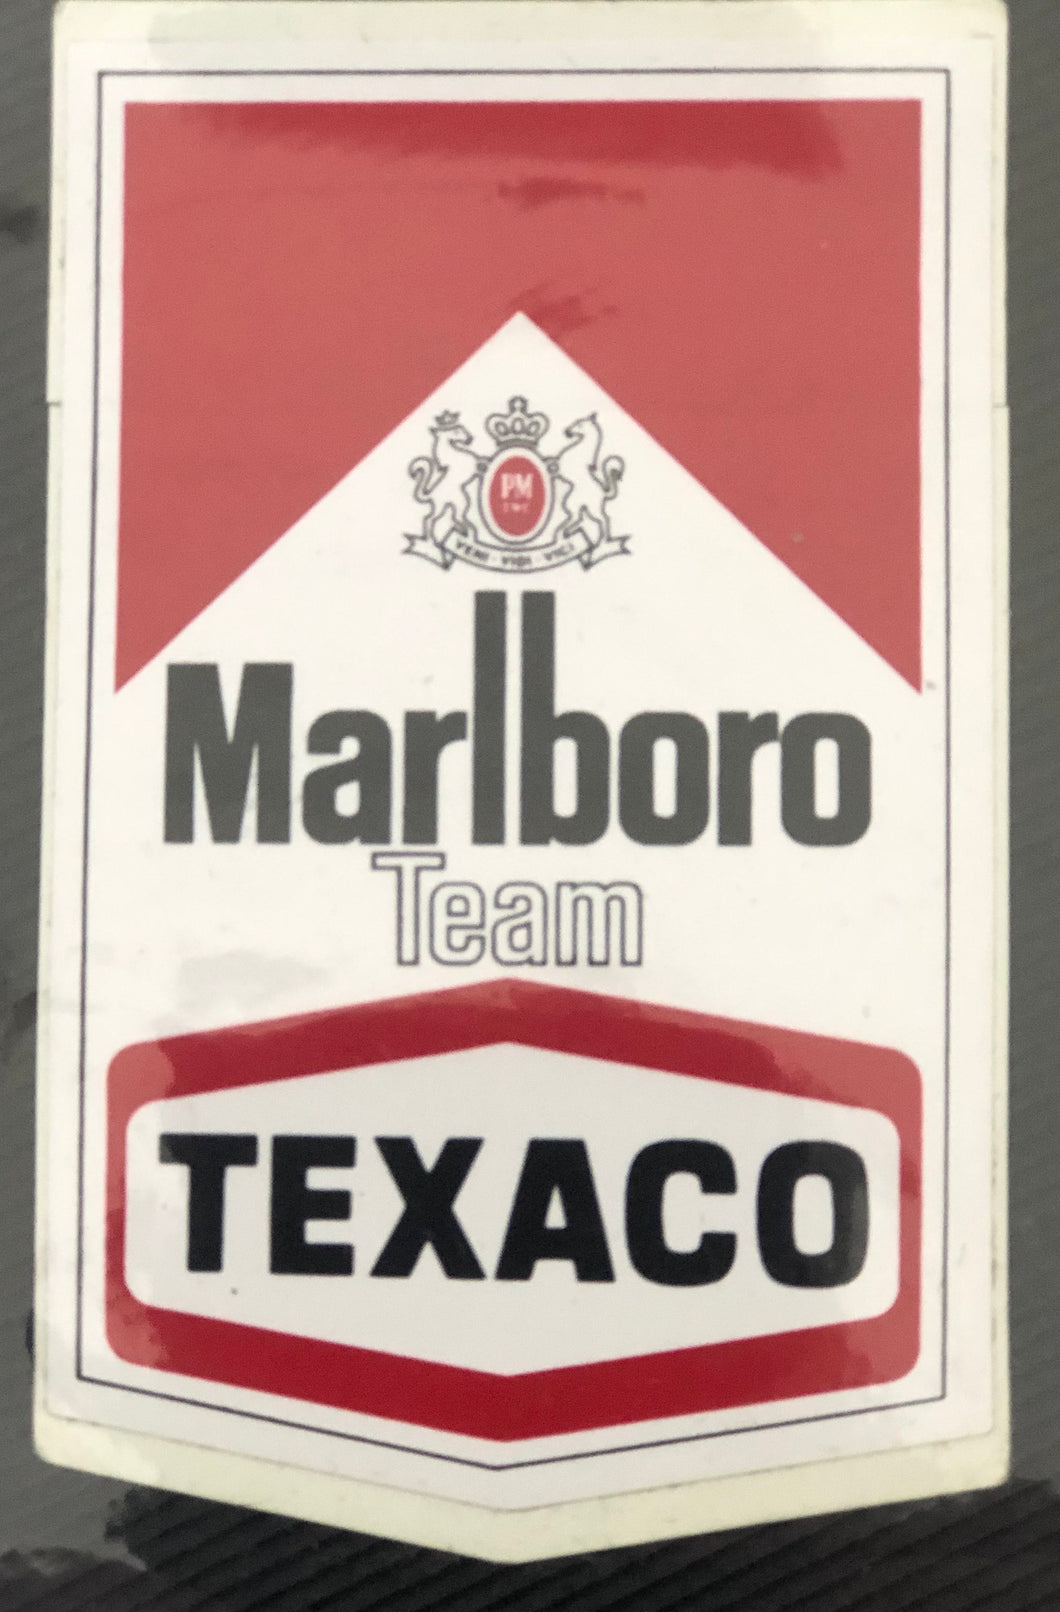 Marlboro team Texaco - Team Shield